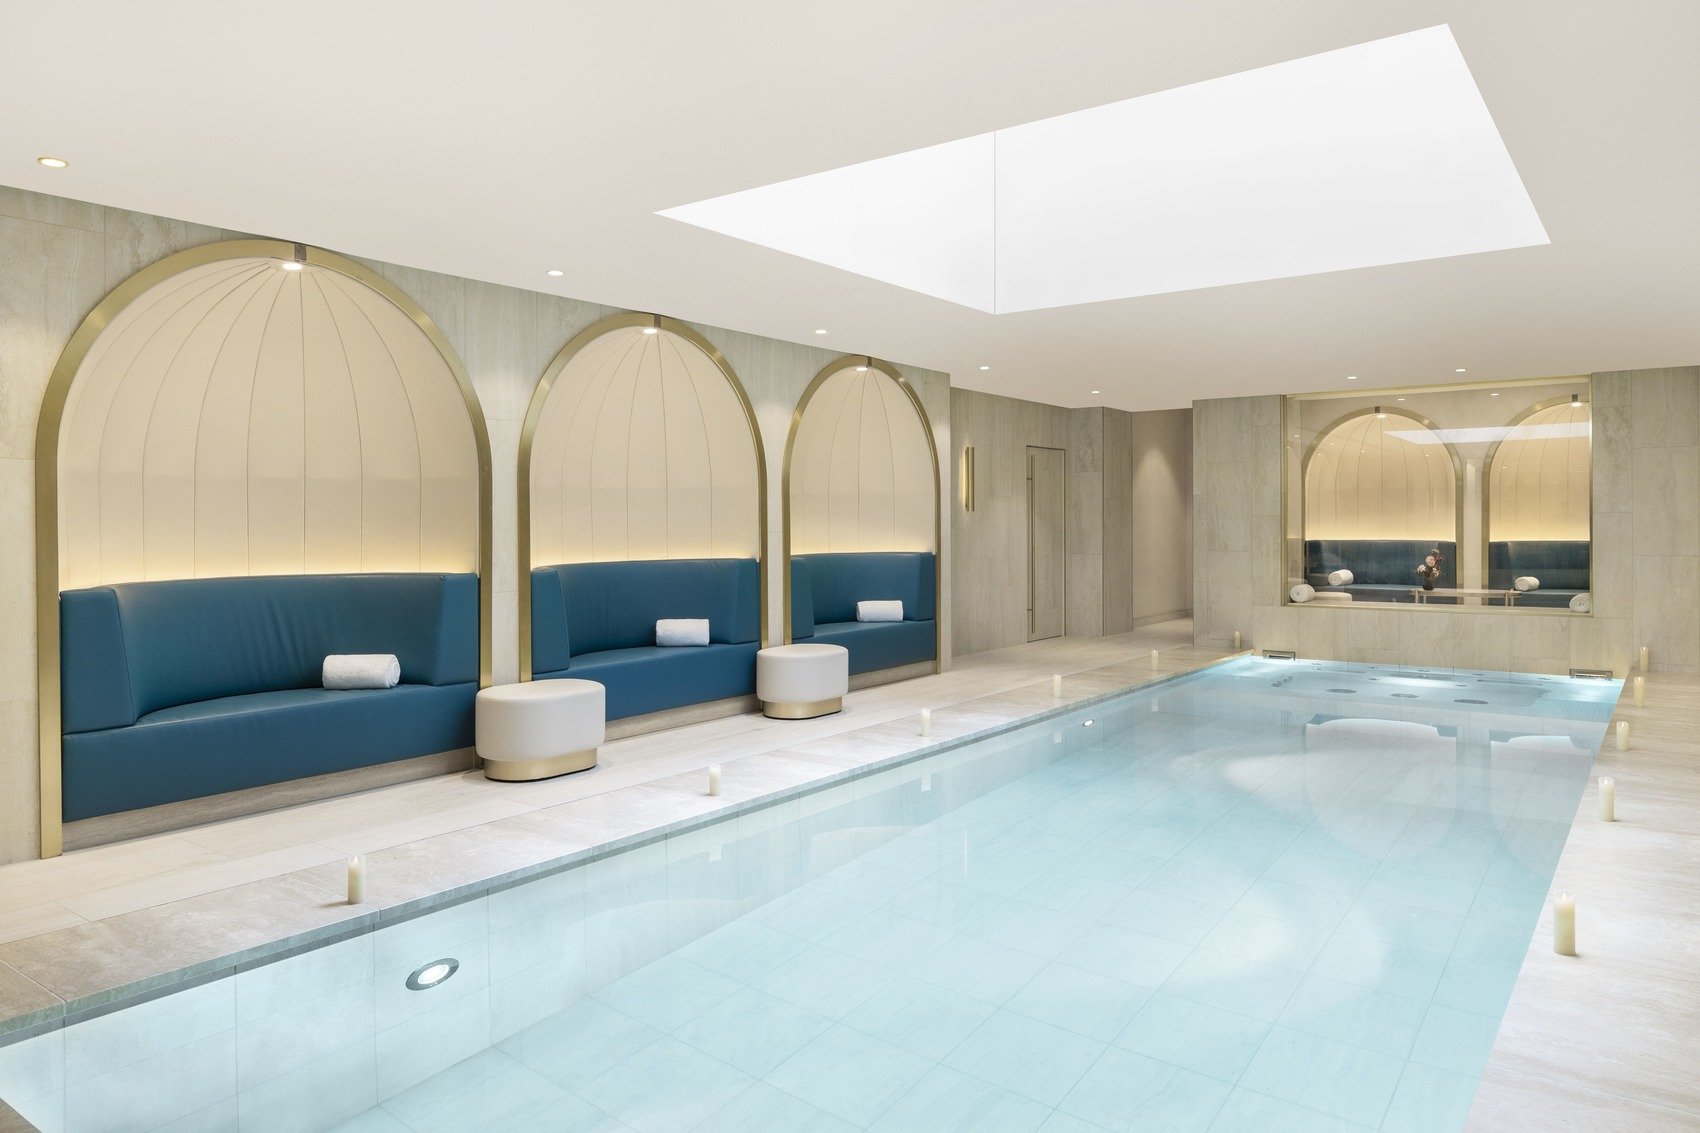 Luxury boutique hotel - Maison Albar Hotels Le Vendome 5 stars - Spa Vendome by Carita Paris